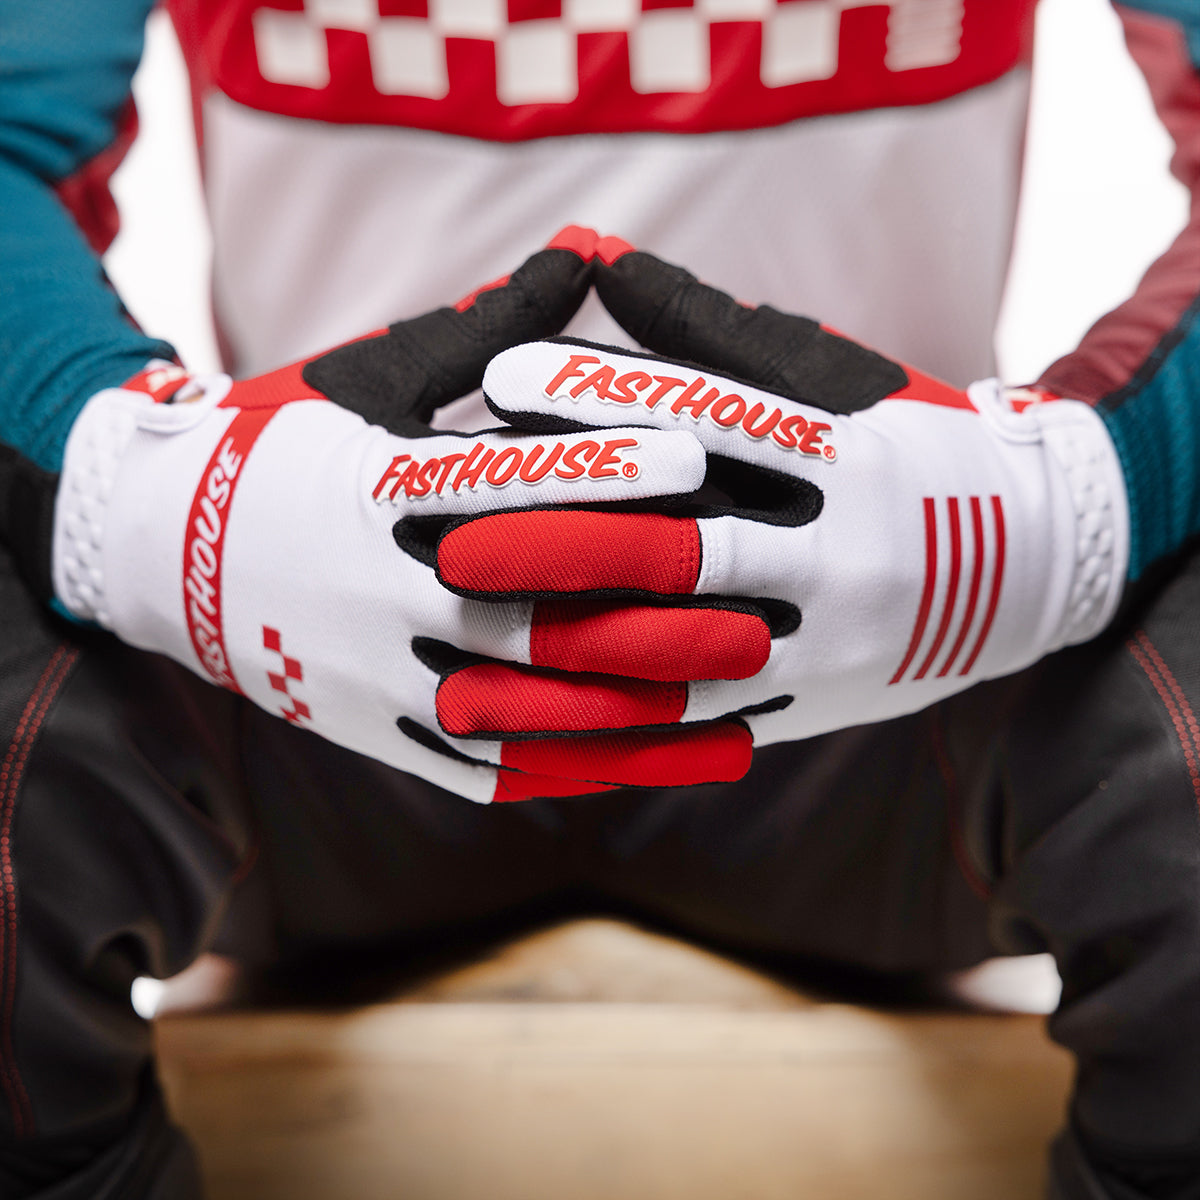 Speed Style Mod Glove - Red/White